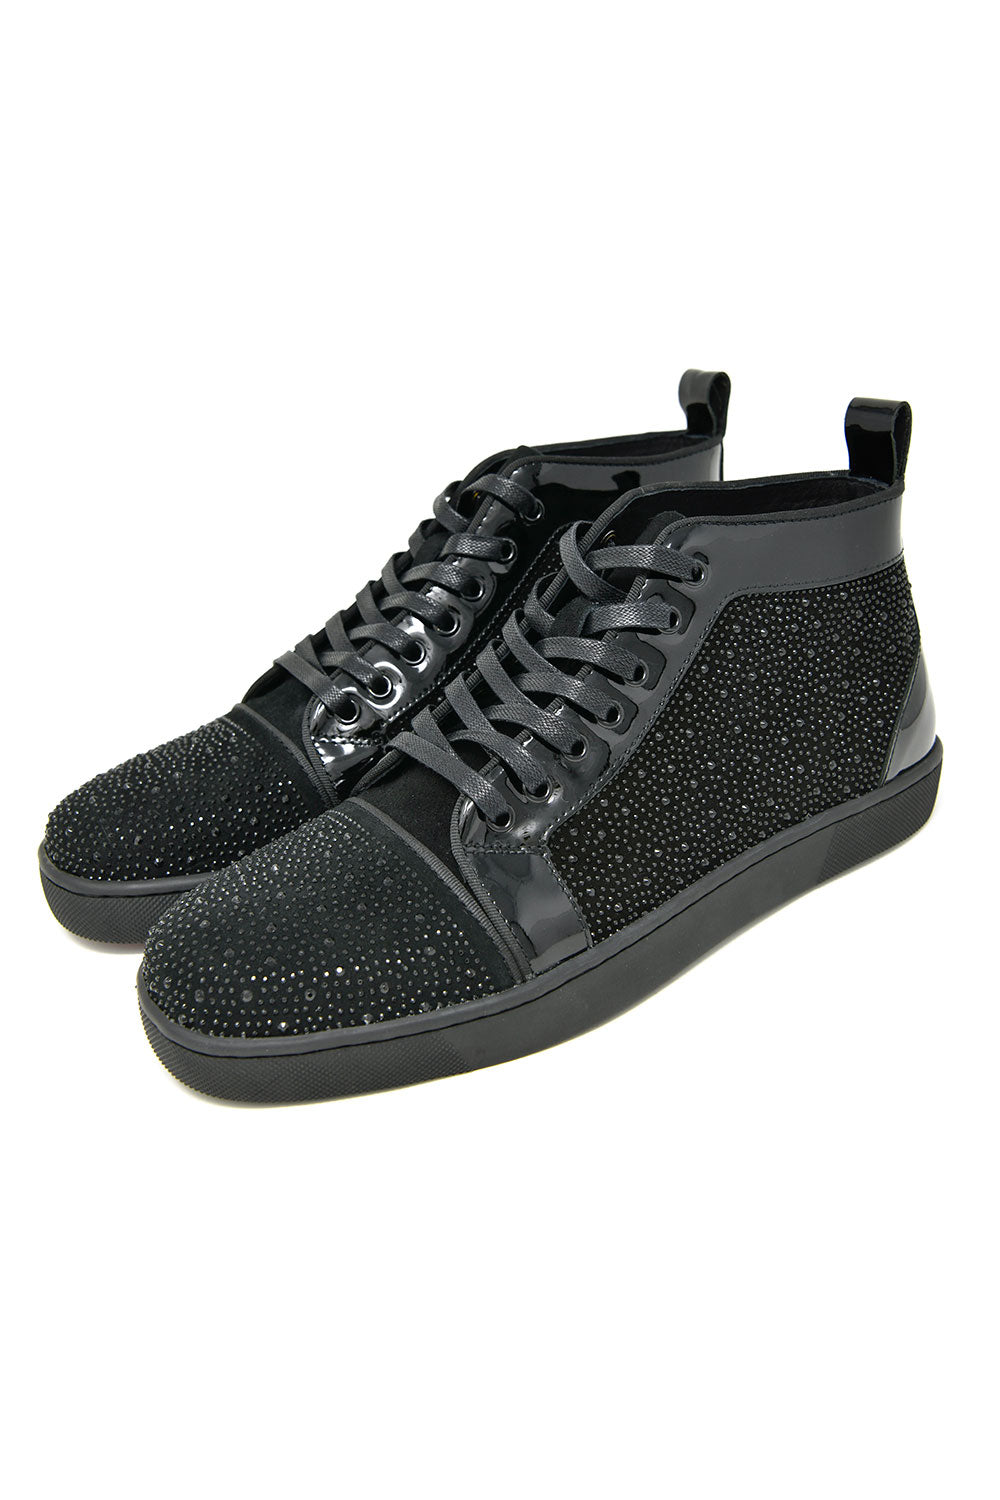 Barabas men's luxury rhinestone diamond black high-top sneakers SH709